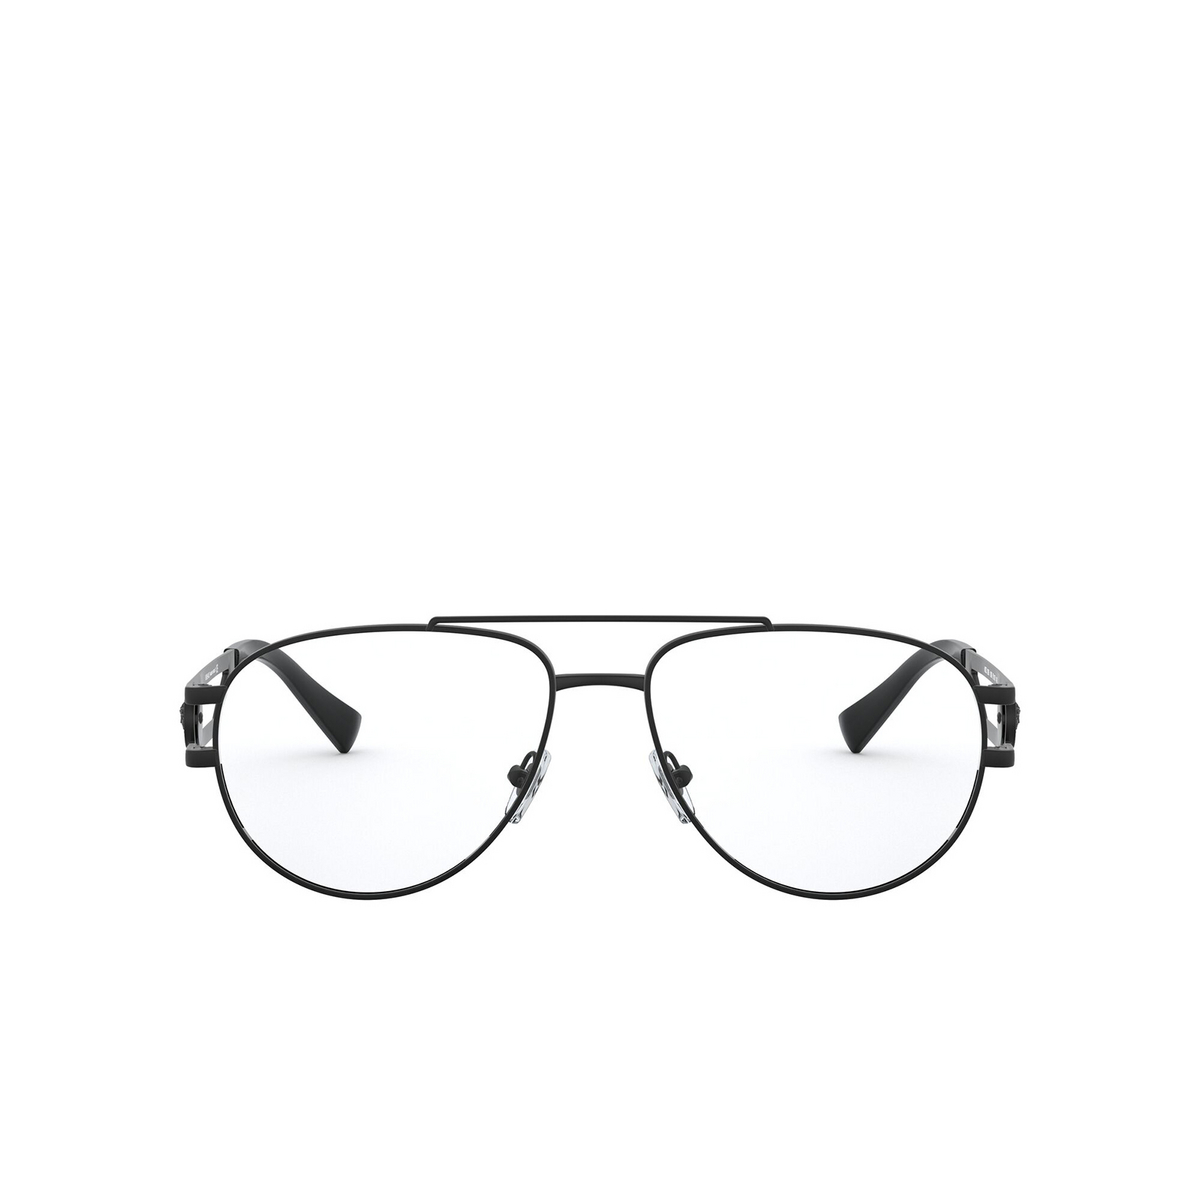 Versace® Aviator Eyeglasses: VE1269 color Matte Black 1009 - front view.